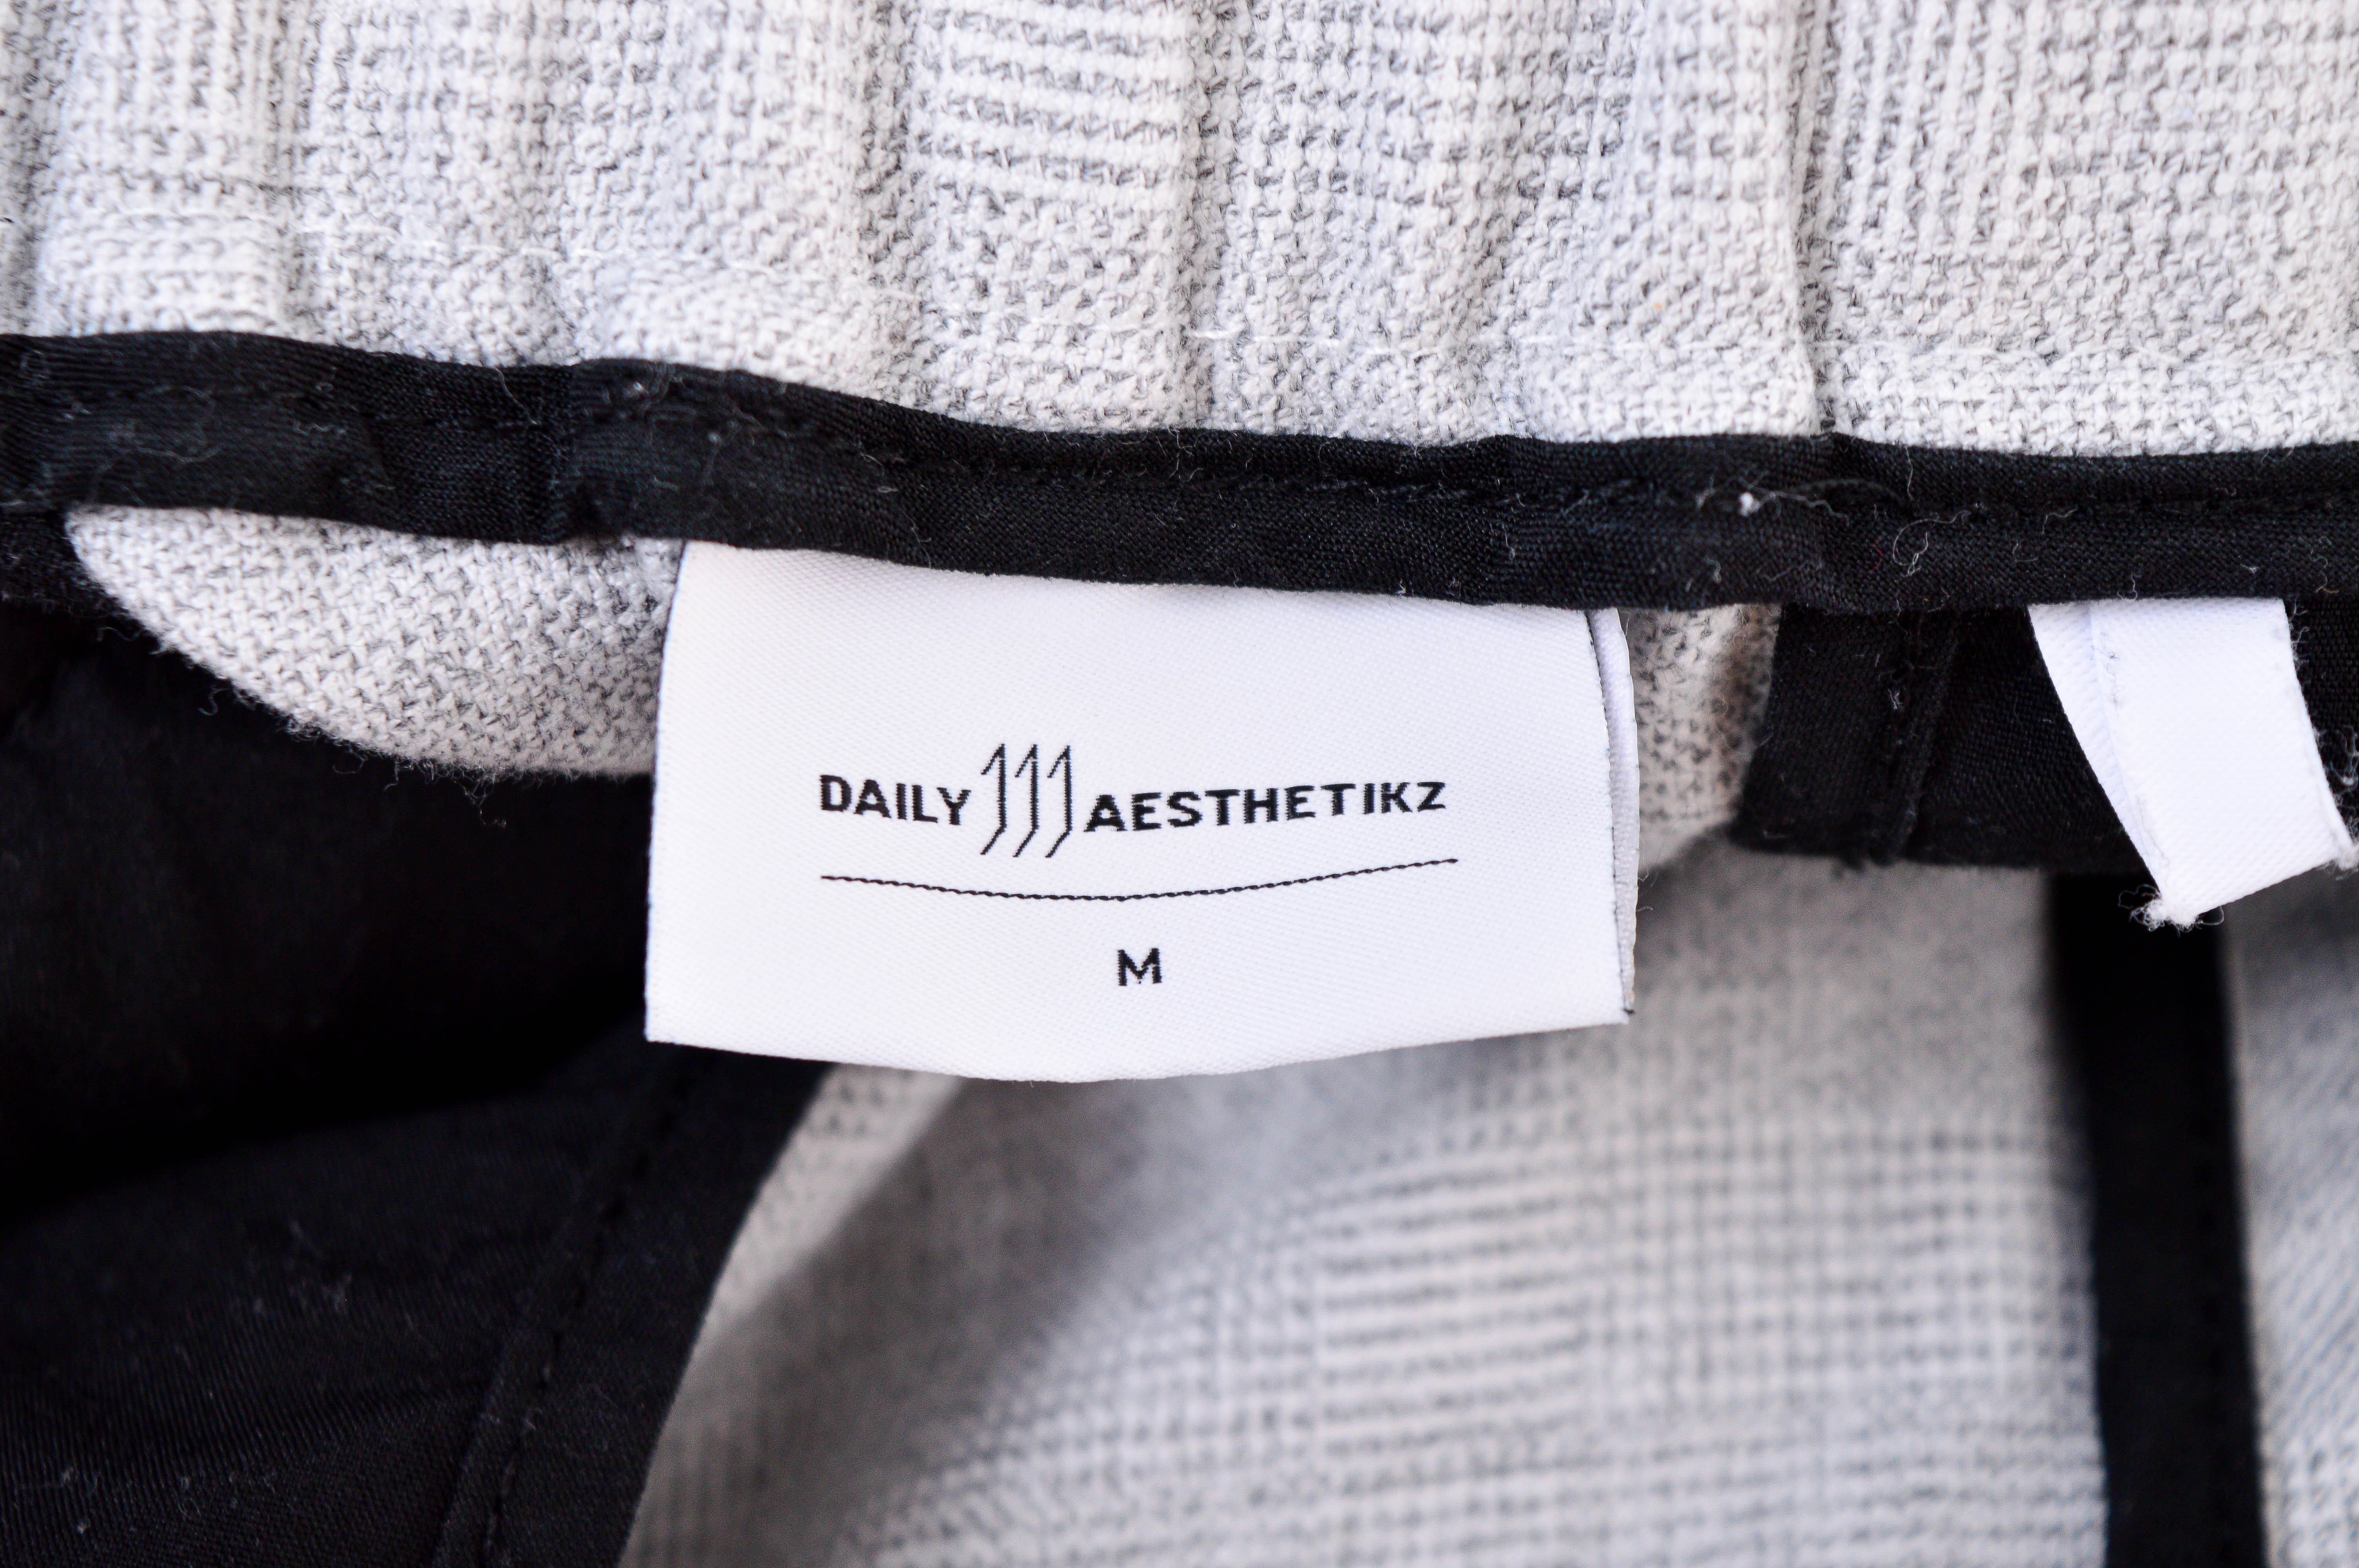 Men's trousers - Daily Aesthetikz - 2